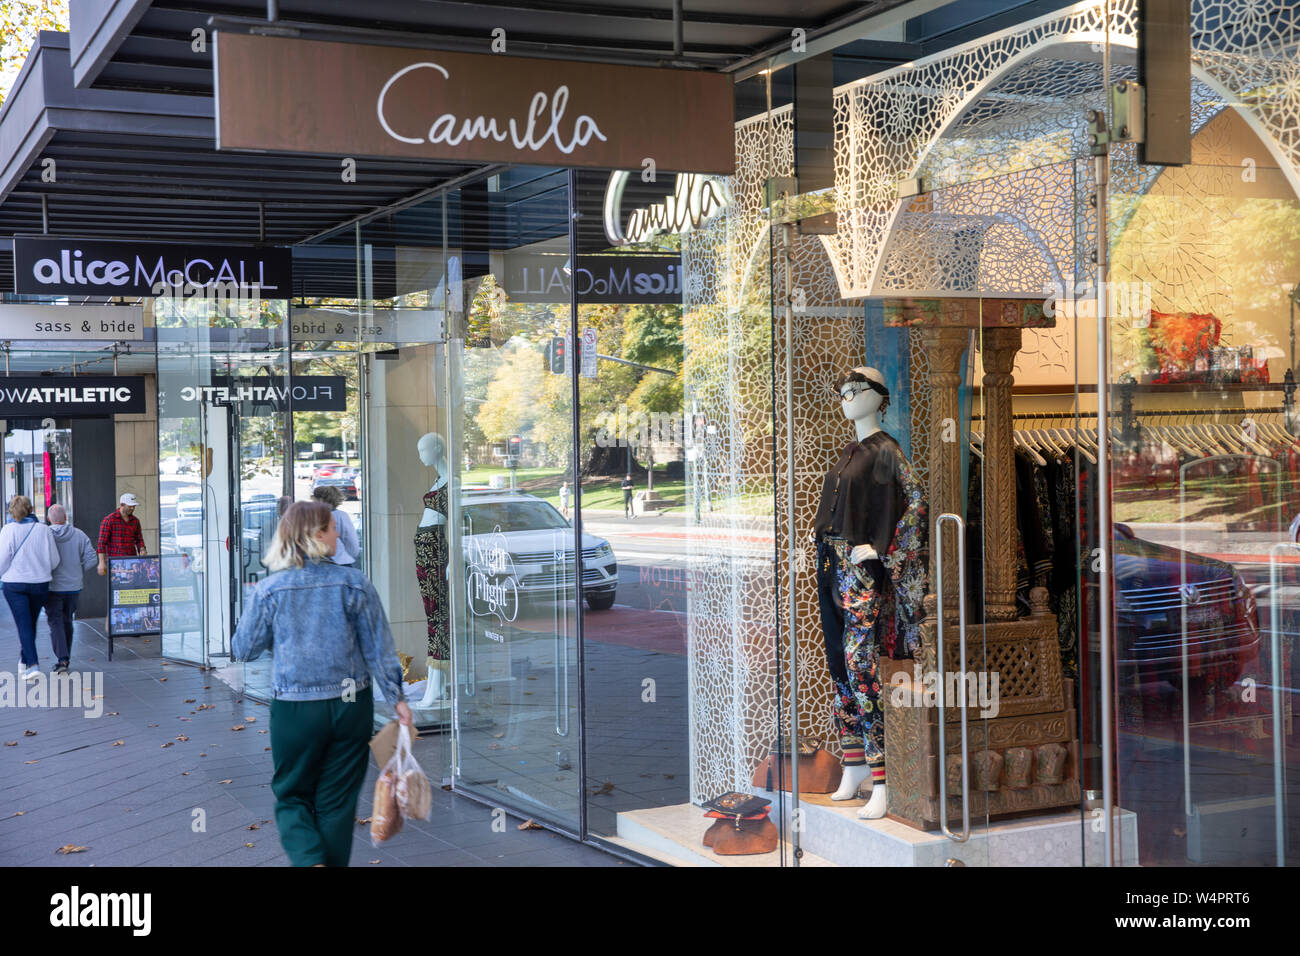 Camilla and Alice Mccall designer clothing stores shops in Oxford street Paddington,Sydney,Australia Stock Photo